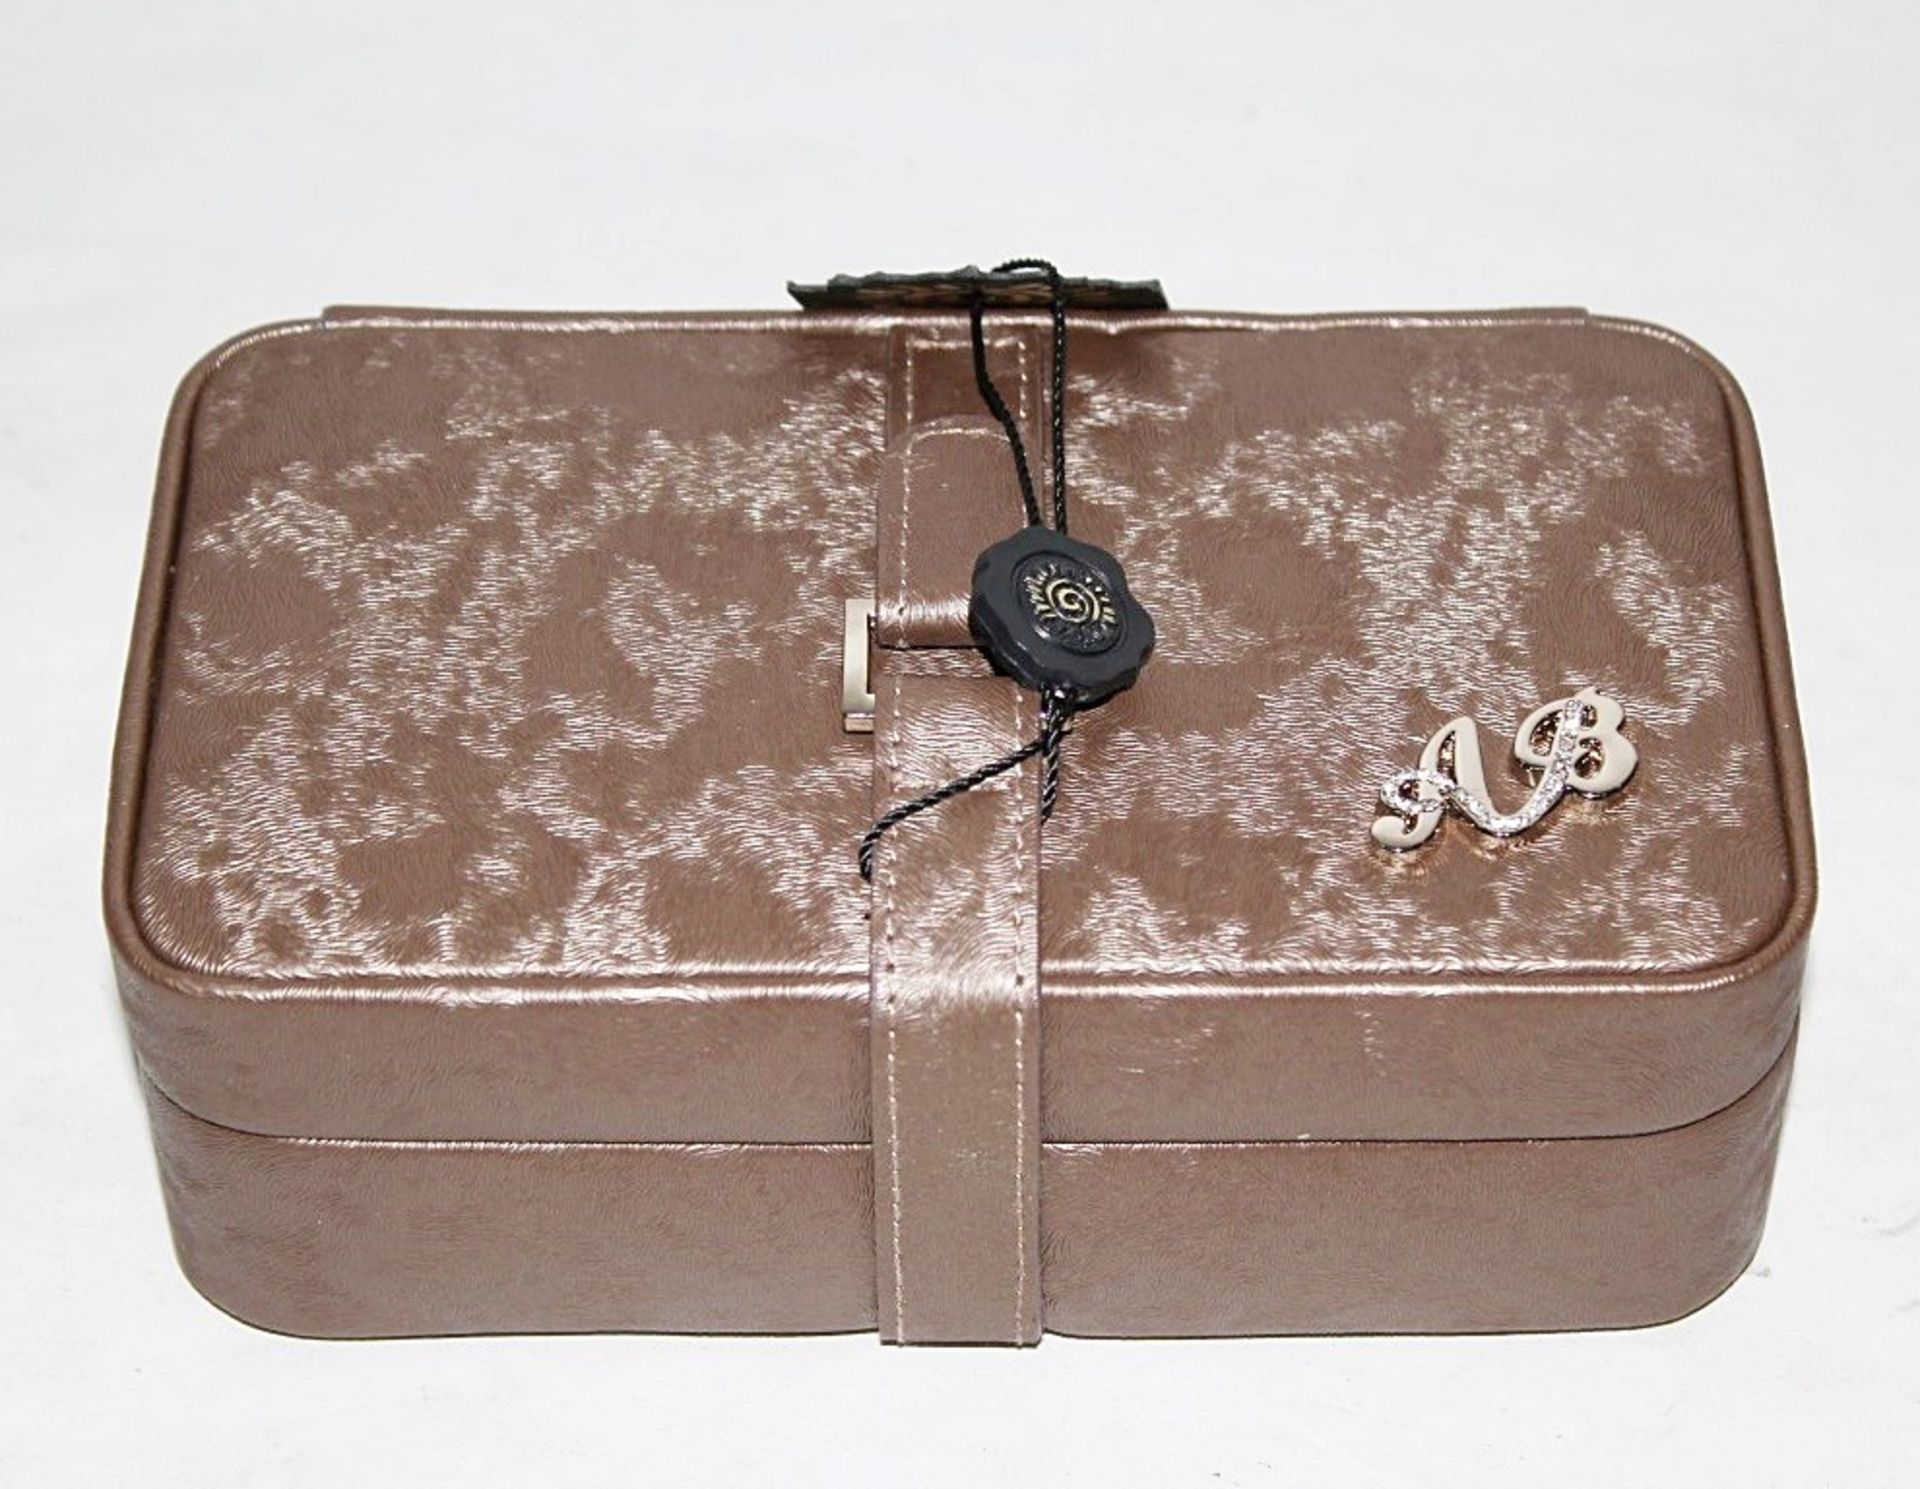 1 x "AB Collezioni" Italian Luxury Jewellery Box With Mirror (33545) - Ref L154 – Ideal For Travel -